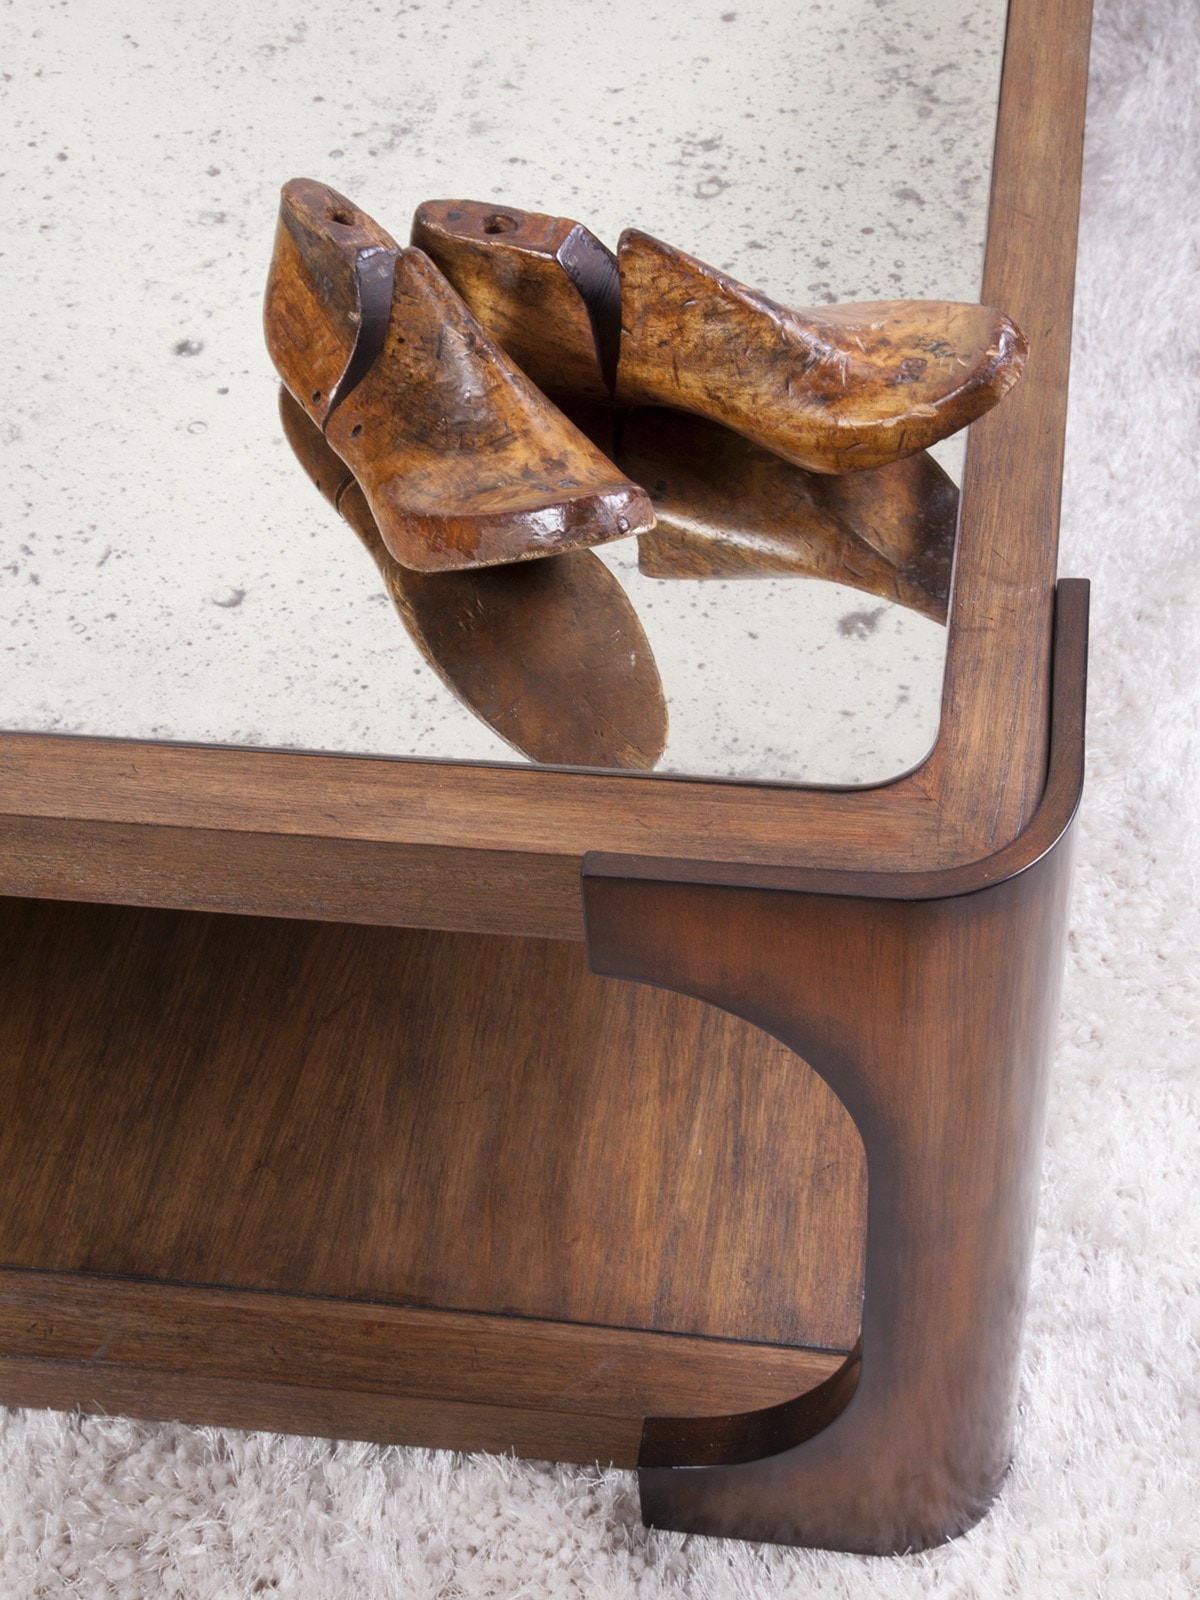 Artistica mirrored coffee table